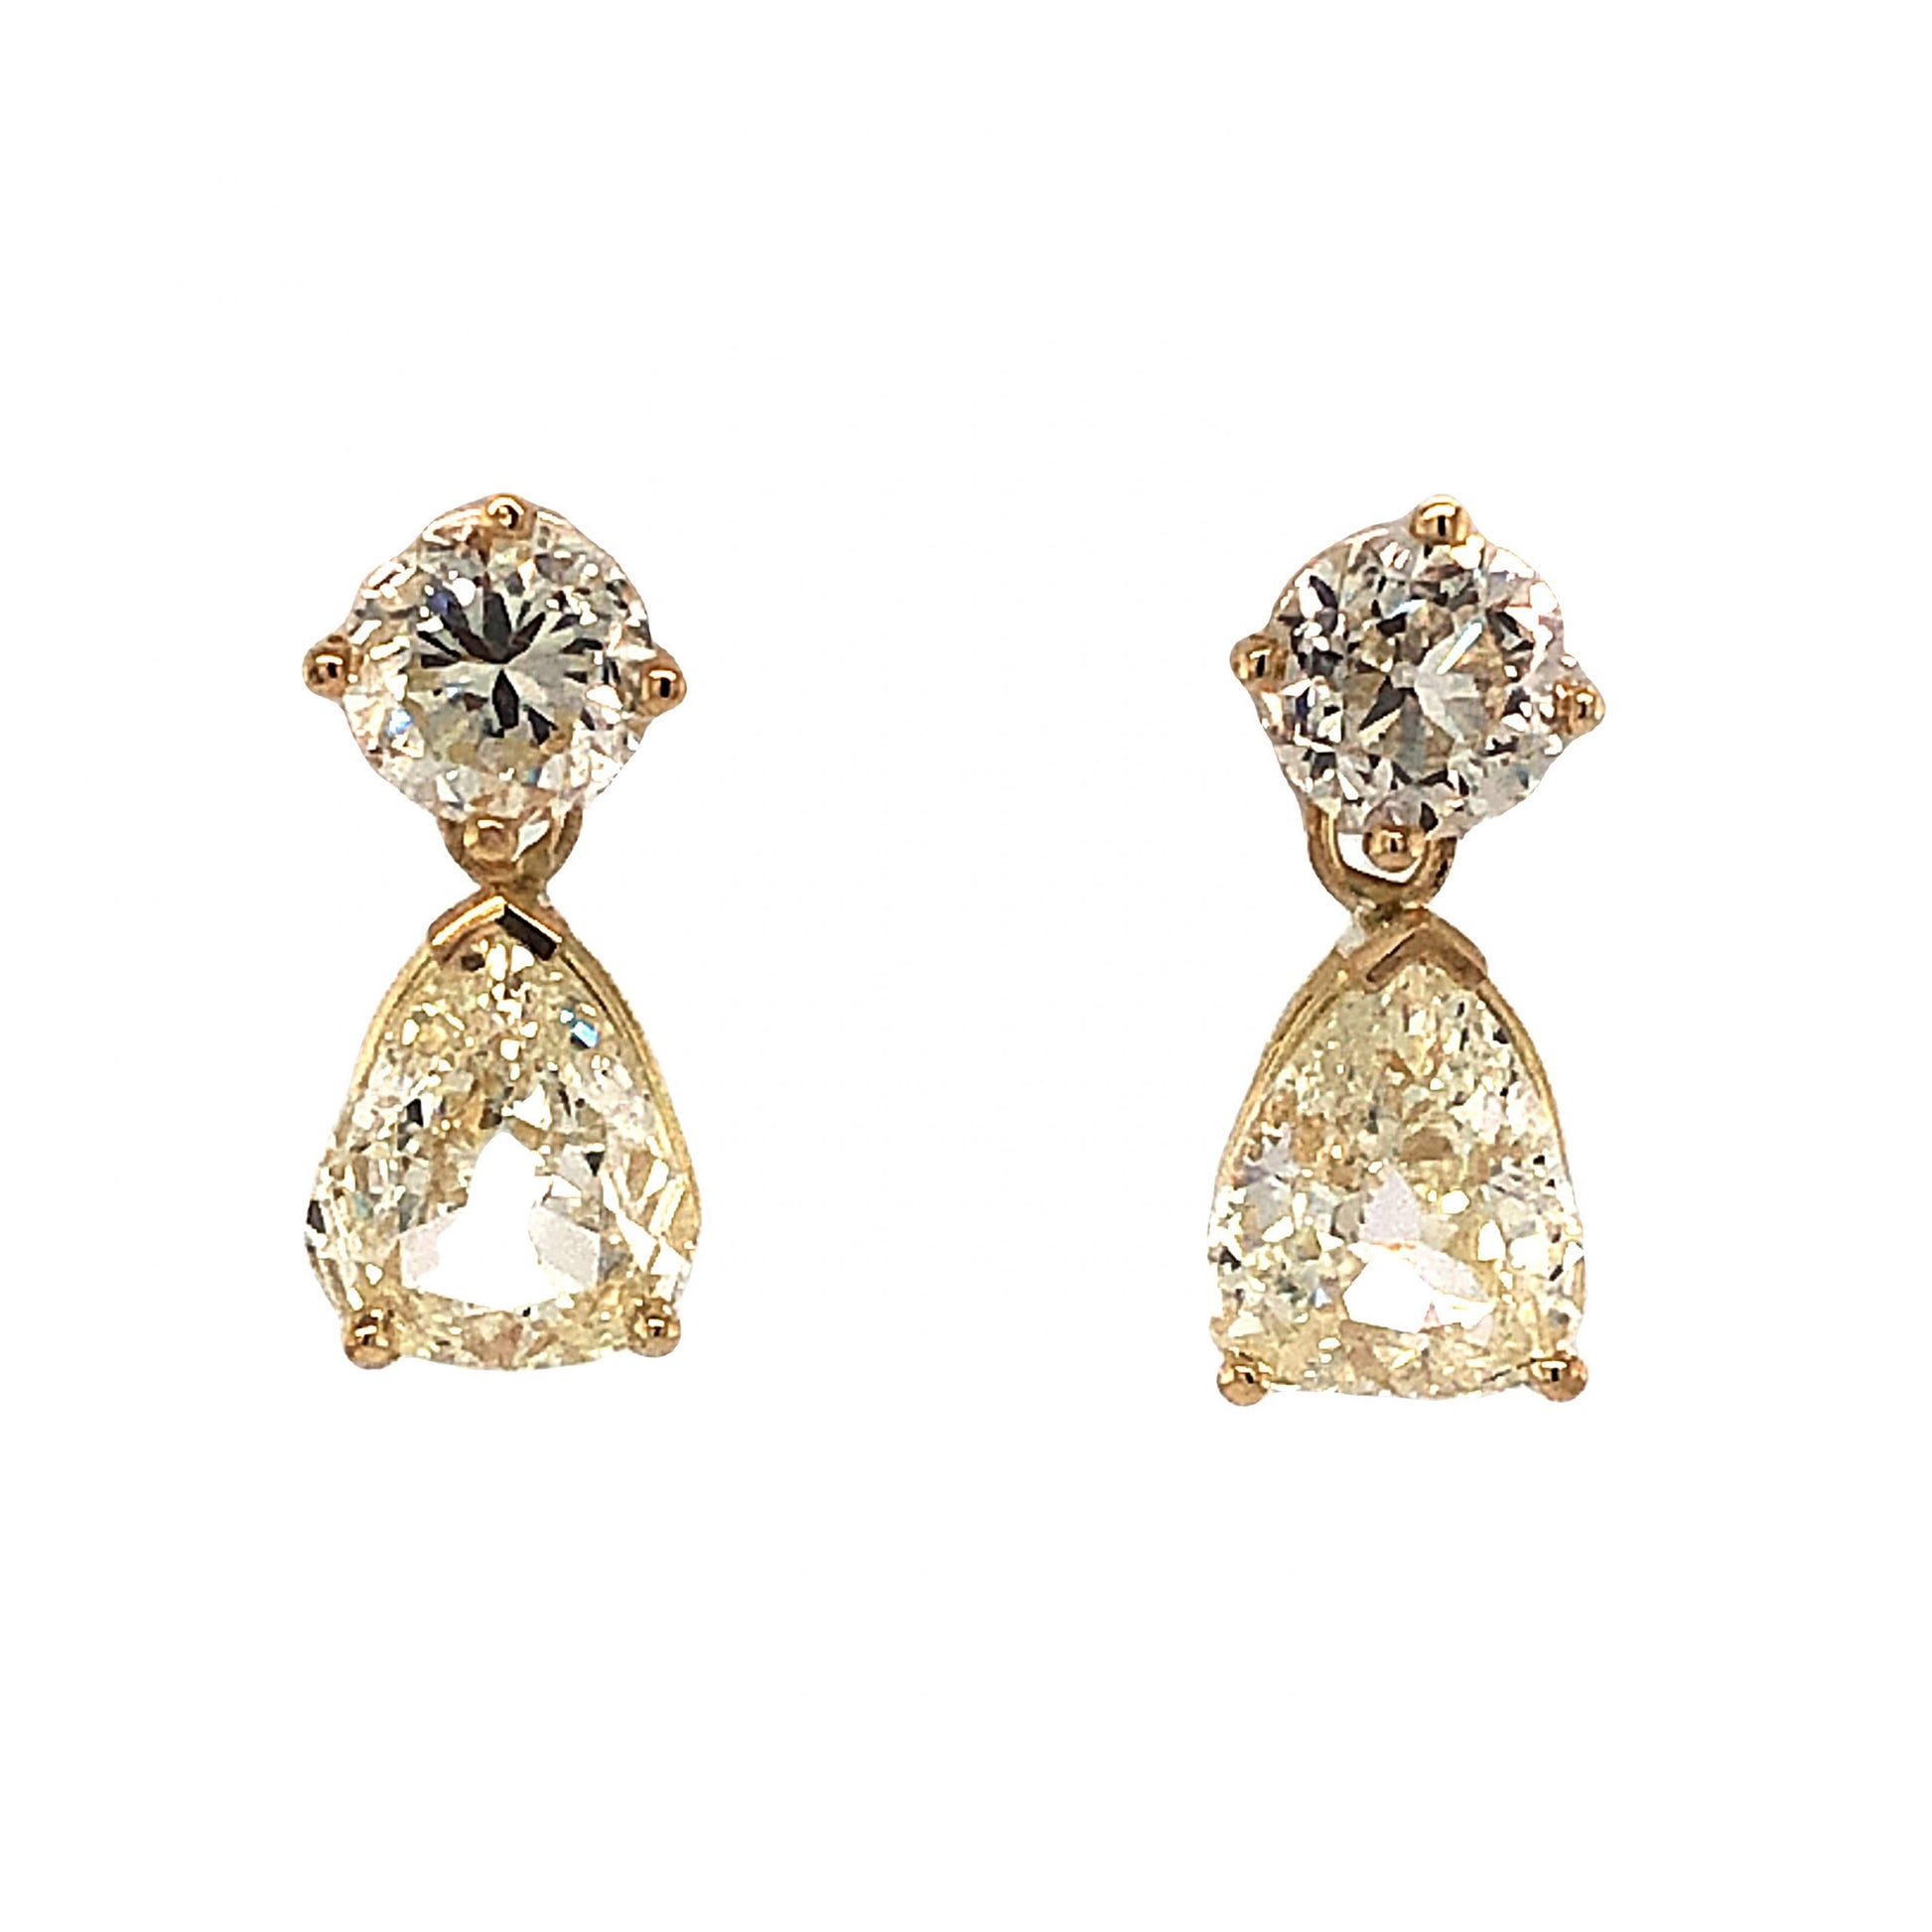 Fancy Yellow Pear Cut Diamond Earrings in 18k Yellow GoldComposition: 18 Karat Yellow GoldTotal Diamond Weight: 4.51 ctTotal Gram Weight: 3.9 gInscription: 18k